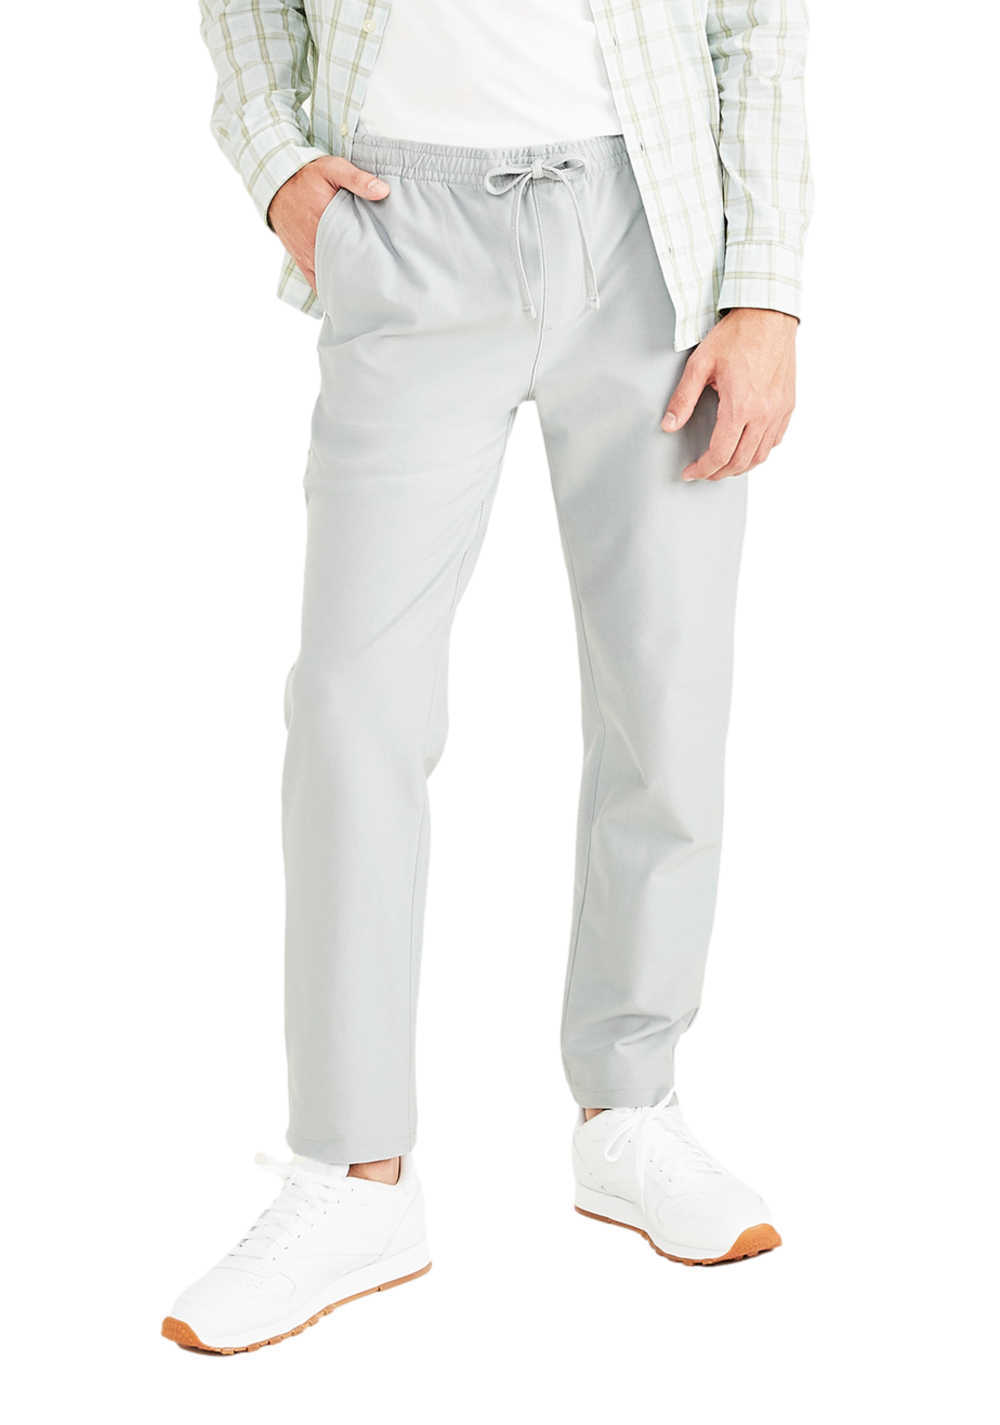 Pantalon Jogger Hombre Casual Alta Calidad Moda - $ 298